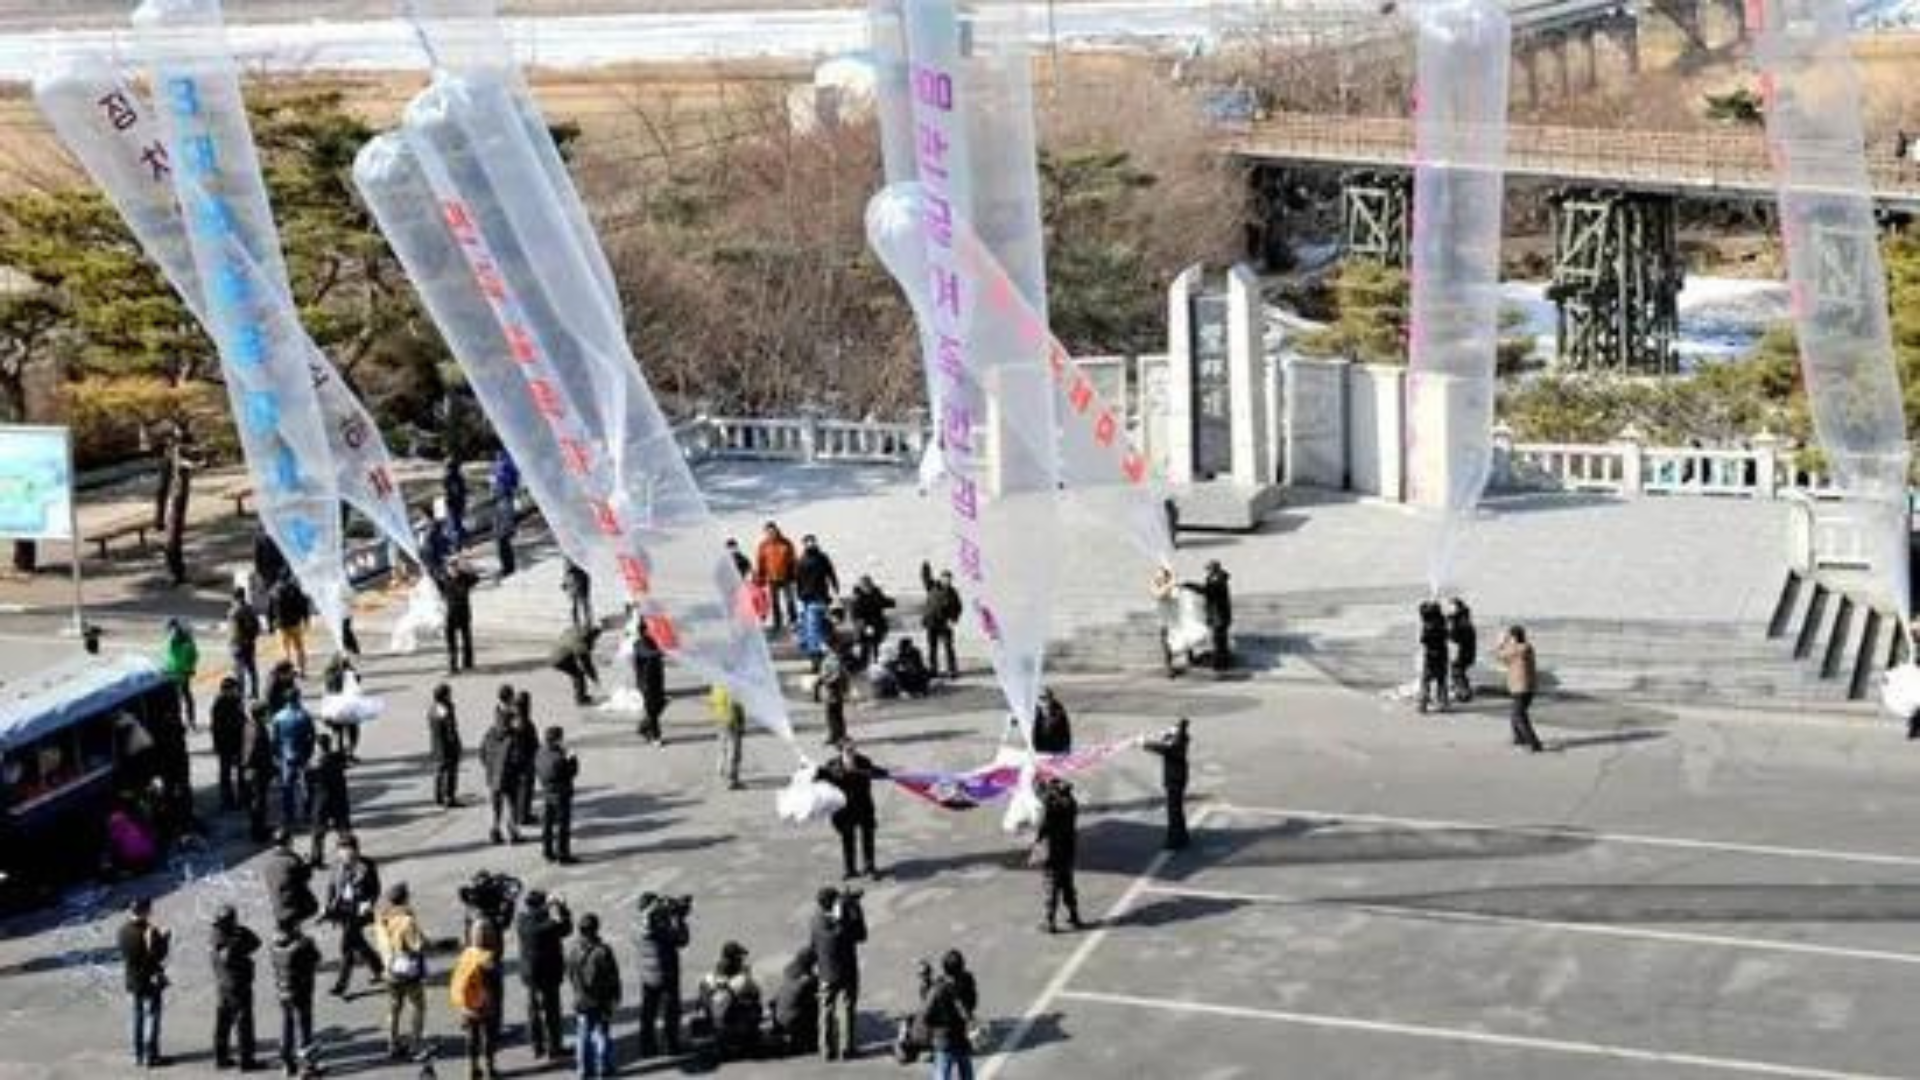 Activists fly K-pop USB sticks into North Korea amid ‘Balloon War’ with South